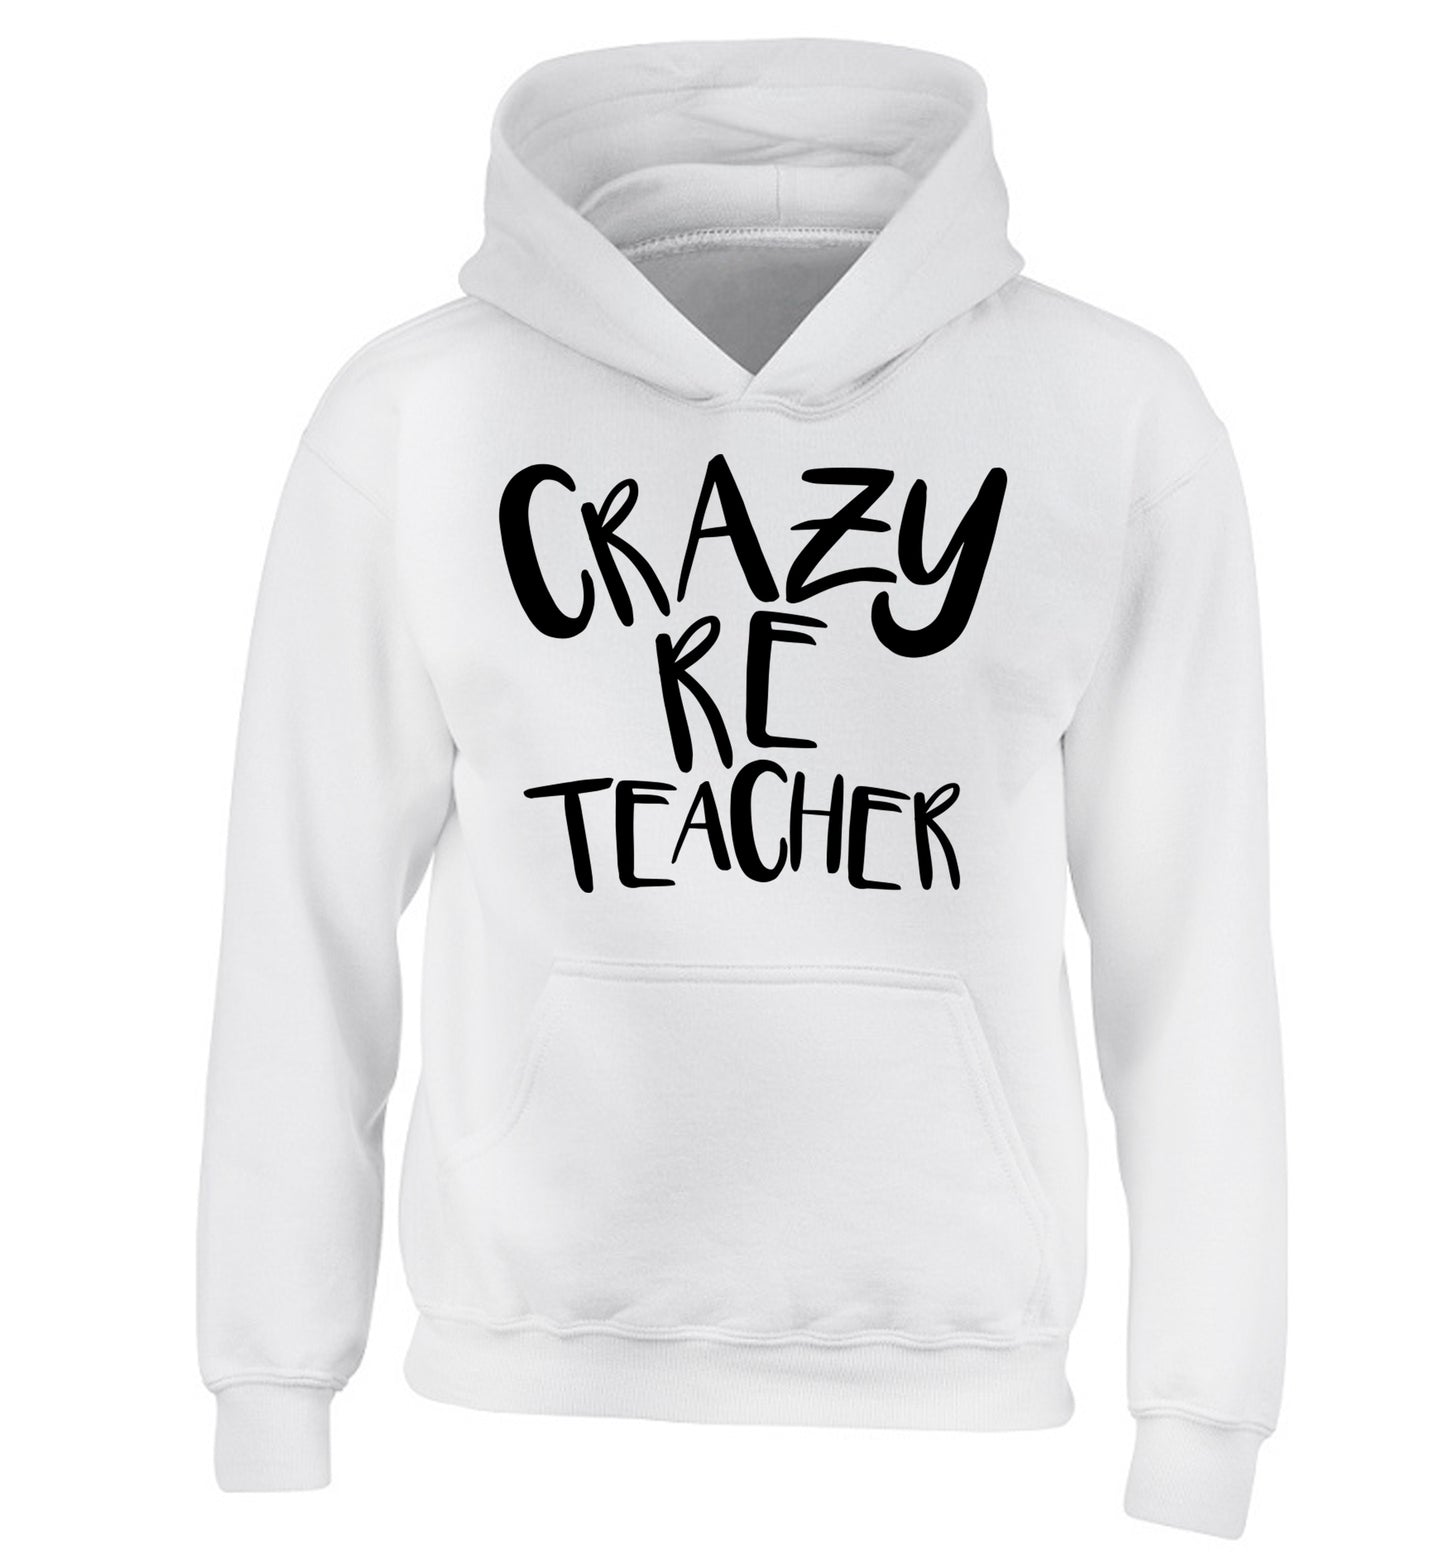 Crazy RE teacher children's white hoodie 12-13 Years